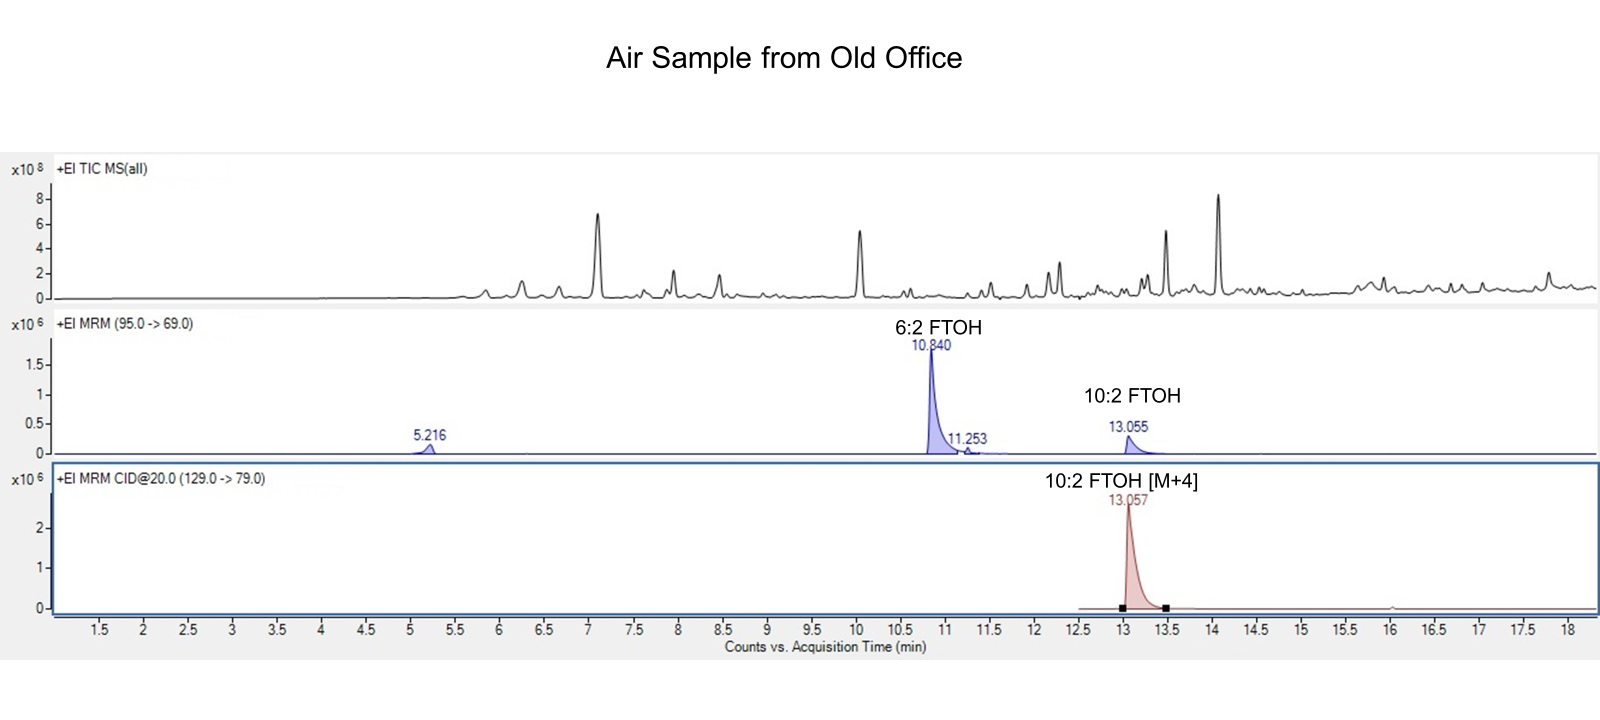 Air-Sampling-Chromatogram-1 TD-GC-MS/MS: The Optimal Solution for Determining PFAS in Air